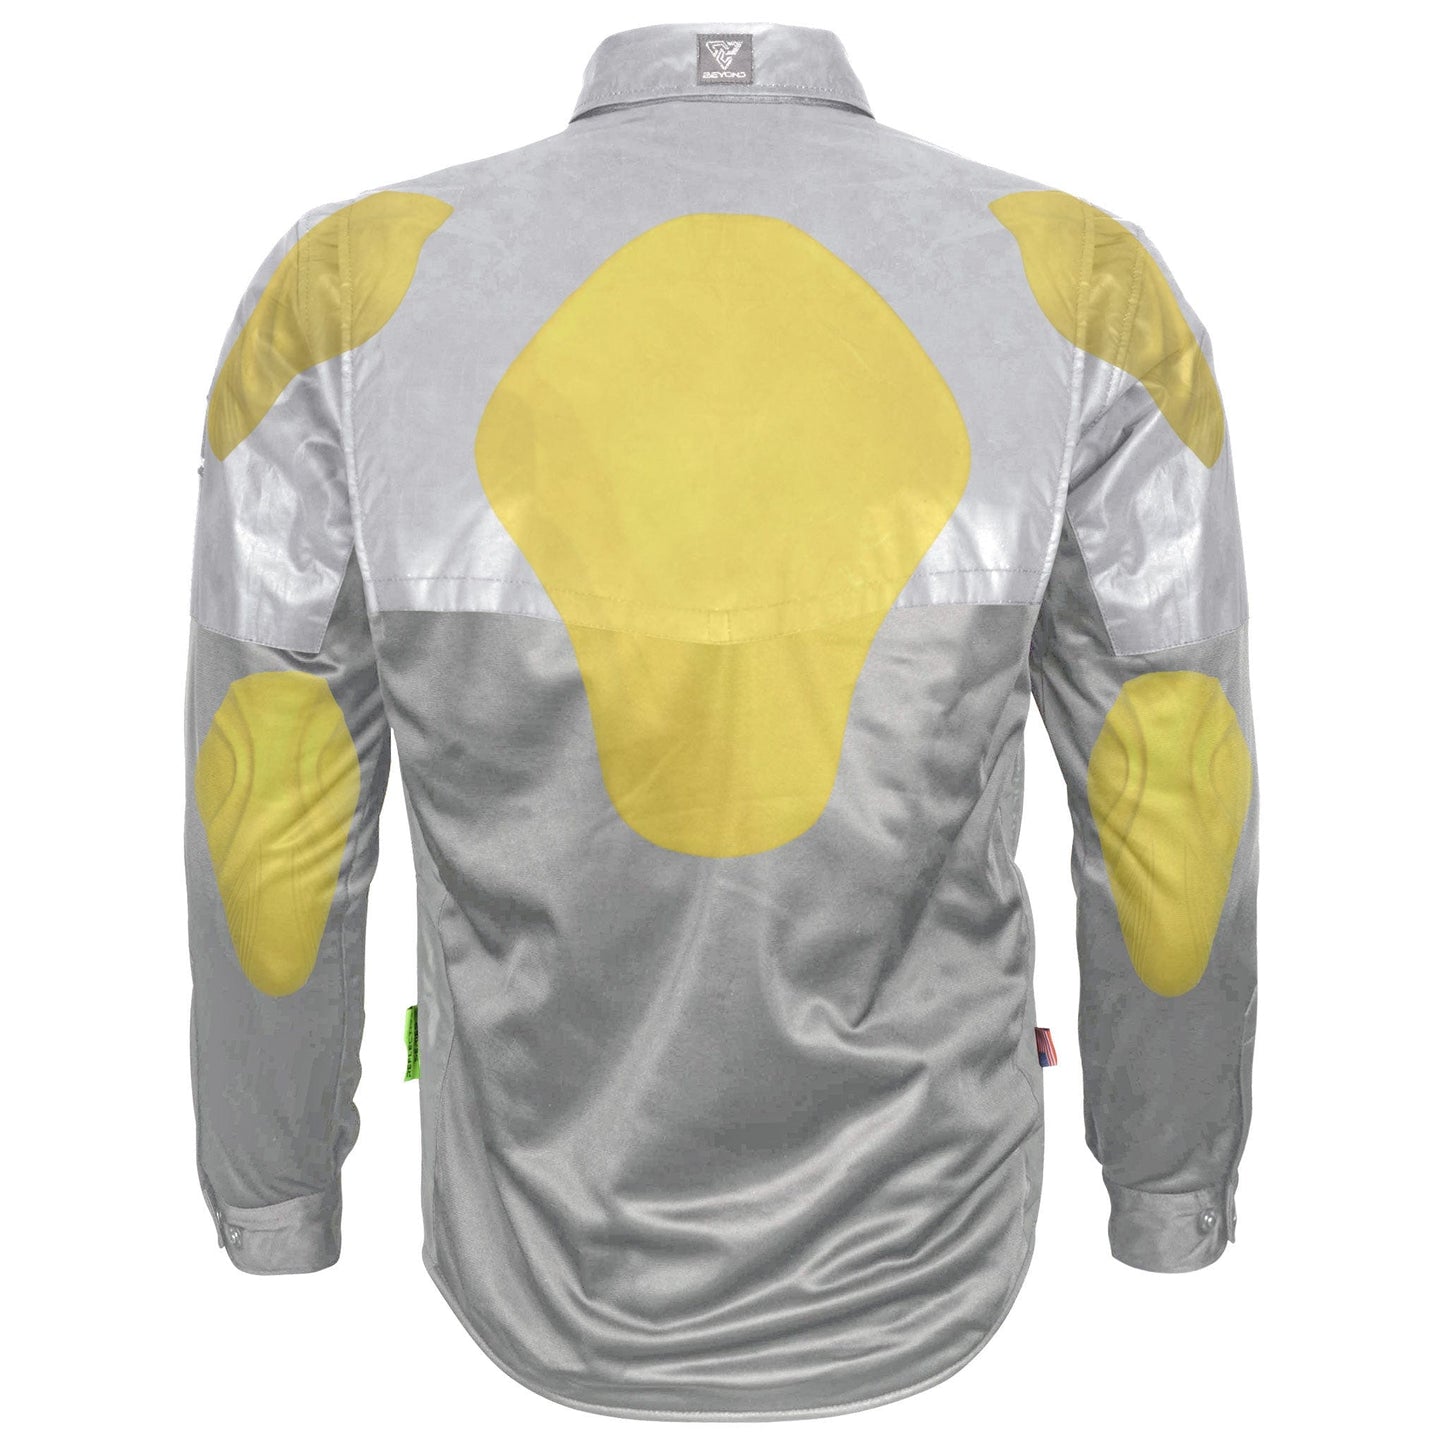 Ultra Reflective Shirt "Twilight Titanium" - Gray with Level 1 Pads